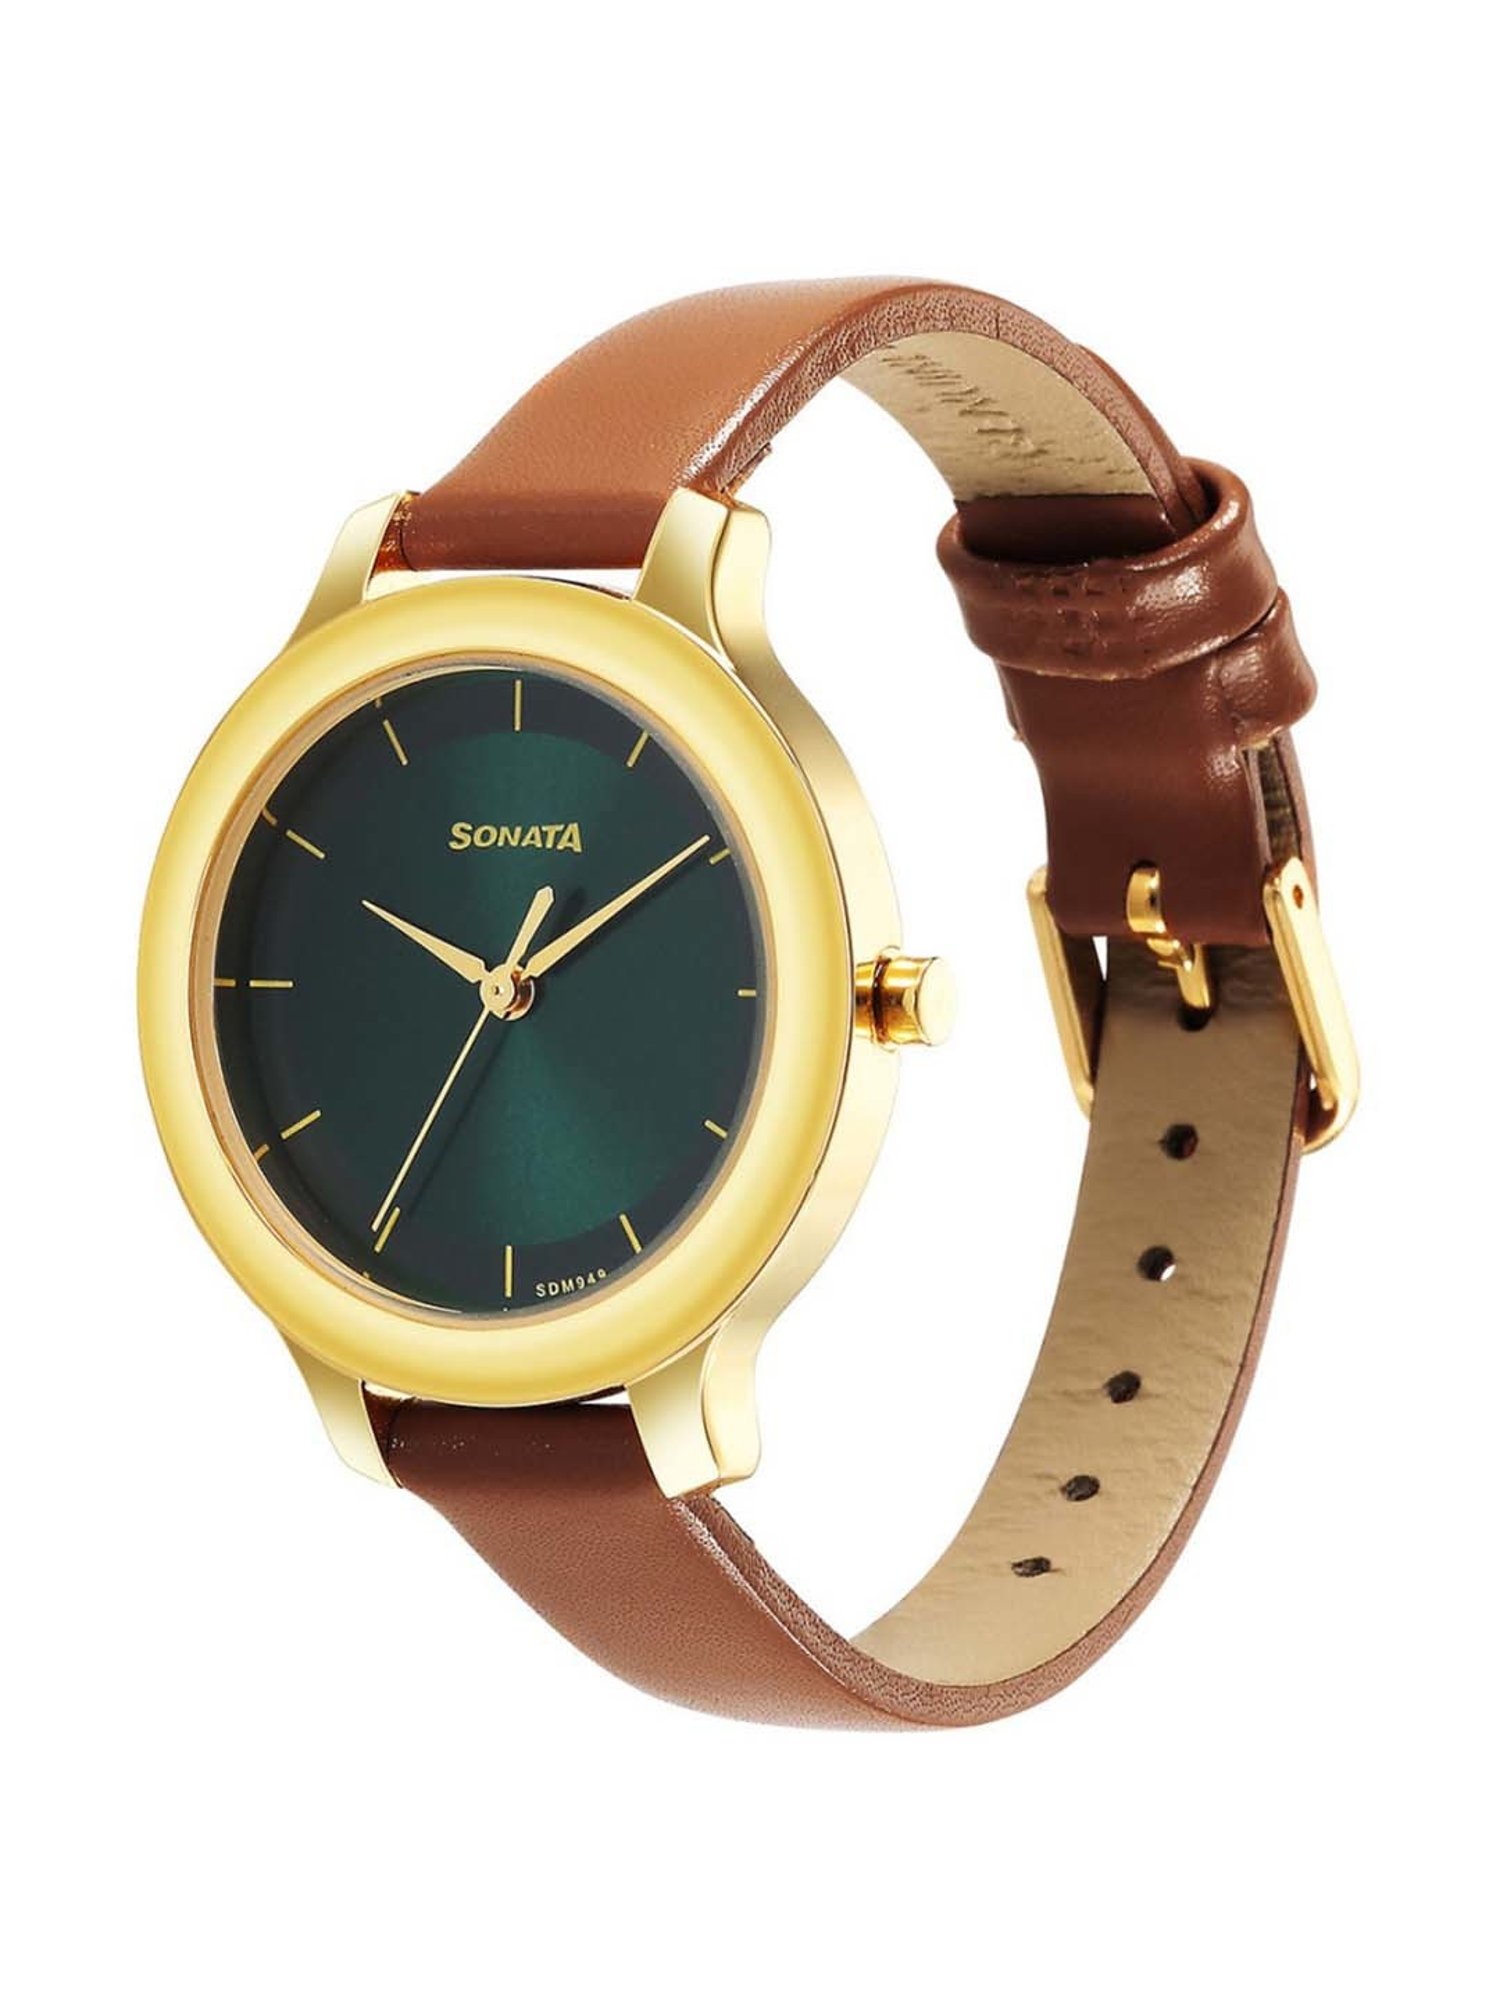 Buy Sonata White Leather Watch-7137AL03 online